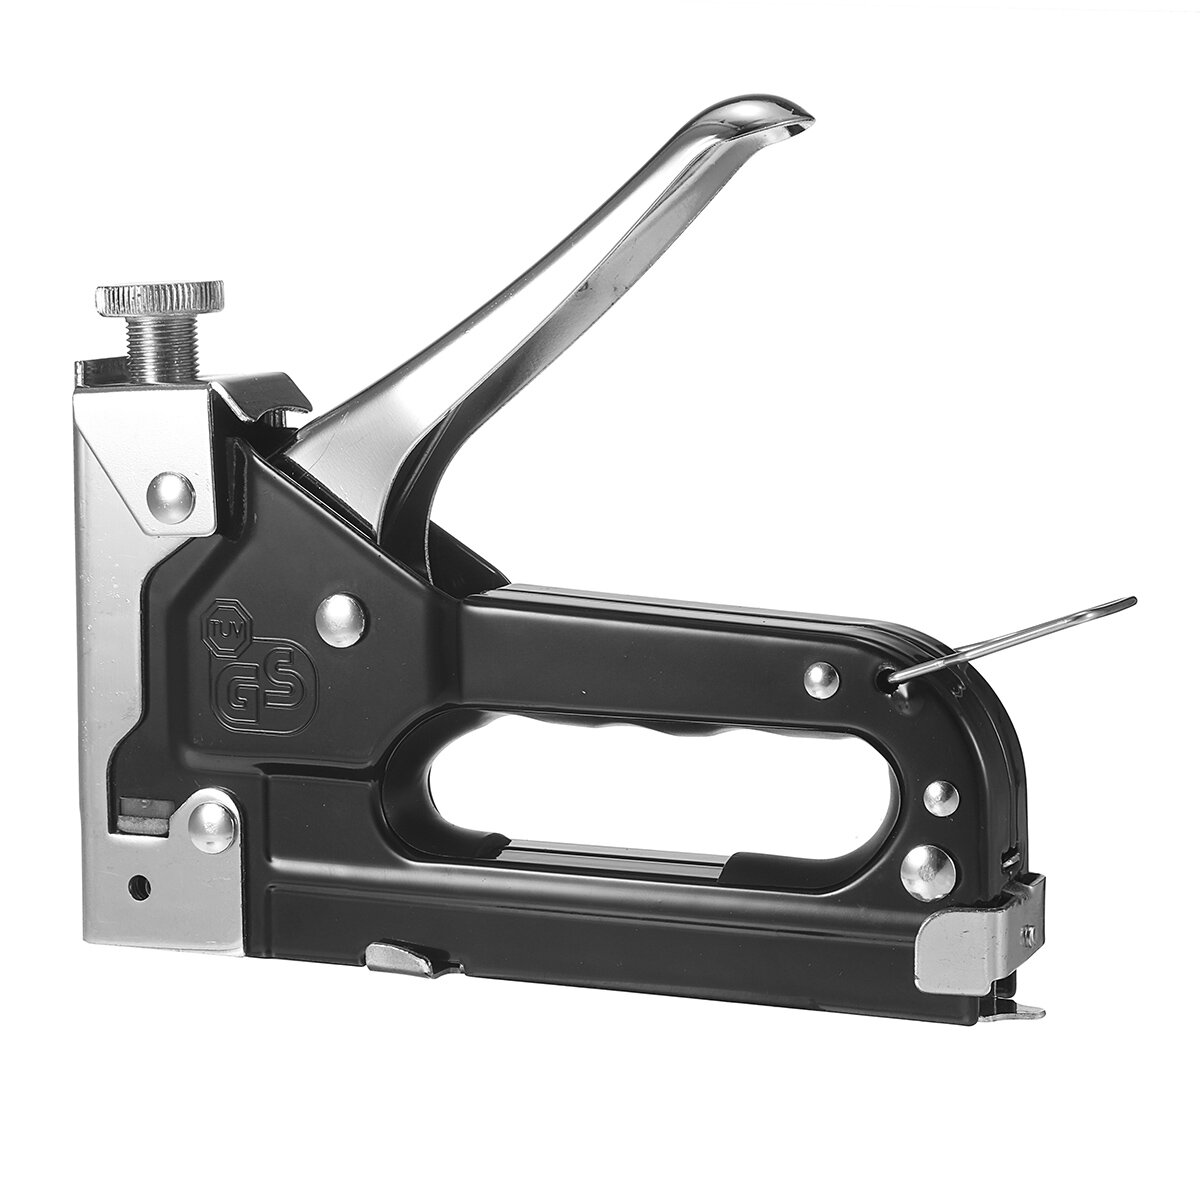 Nail Stapler Manual Nail Stapler Three-use Heavy-Duty Stainless Steel Nail Stapler With 1000 Staples